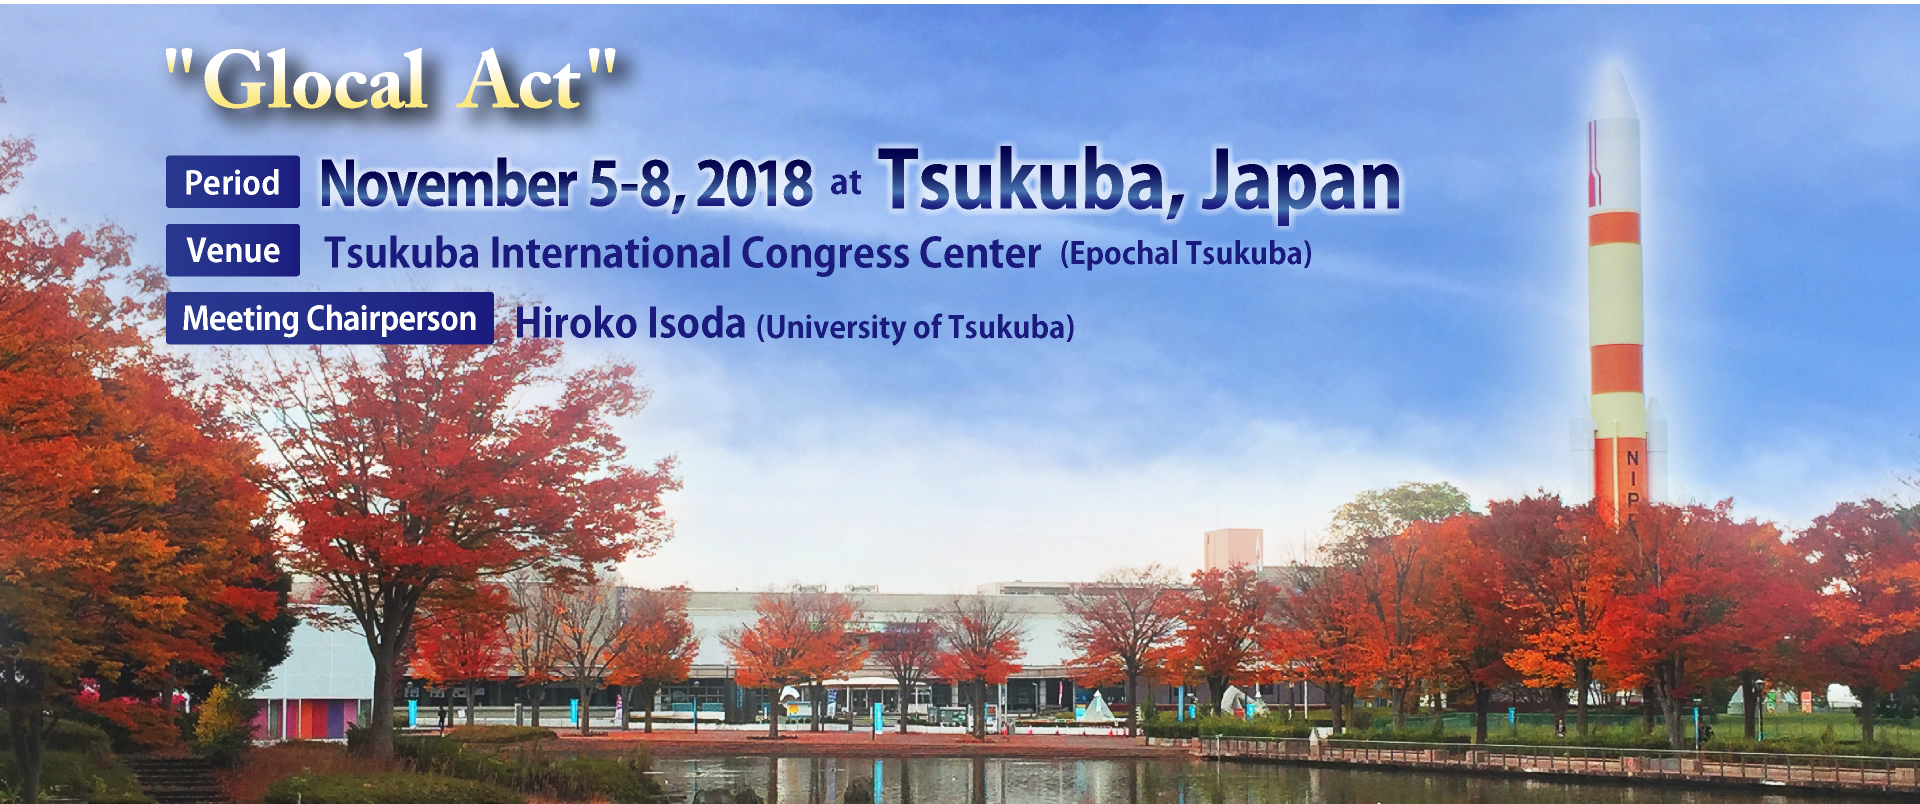 Glocal Act
Period: November 5-8, 2018 at Tsukuba, Japan
Venue: Tsukuba International Congress Center (Epochal Tsukuba)
Meeting Chairperson: Hiroko Isoda (University of Tsukuba)